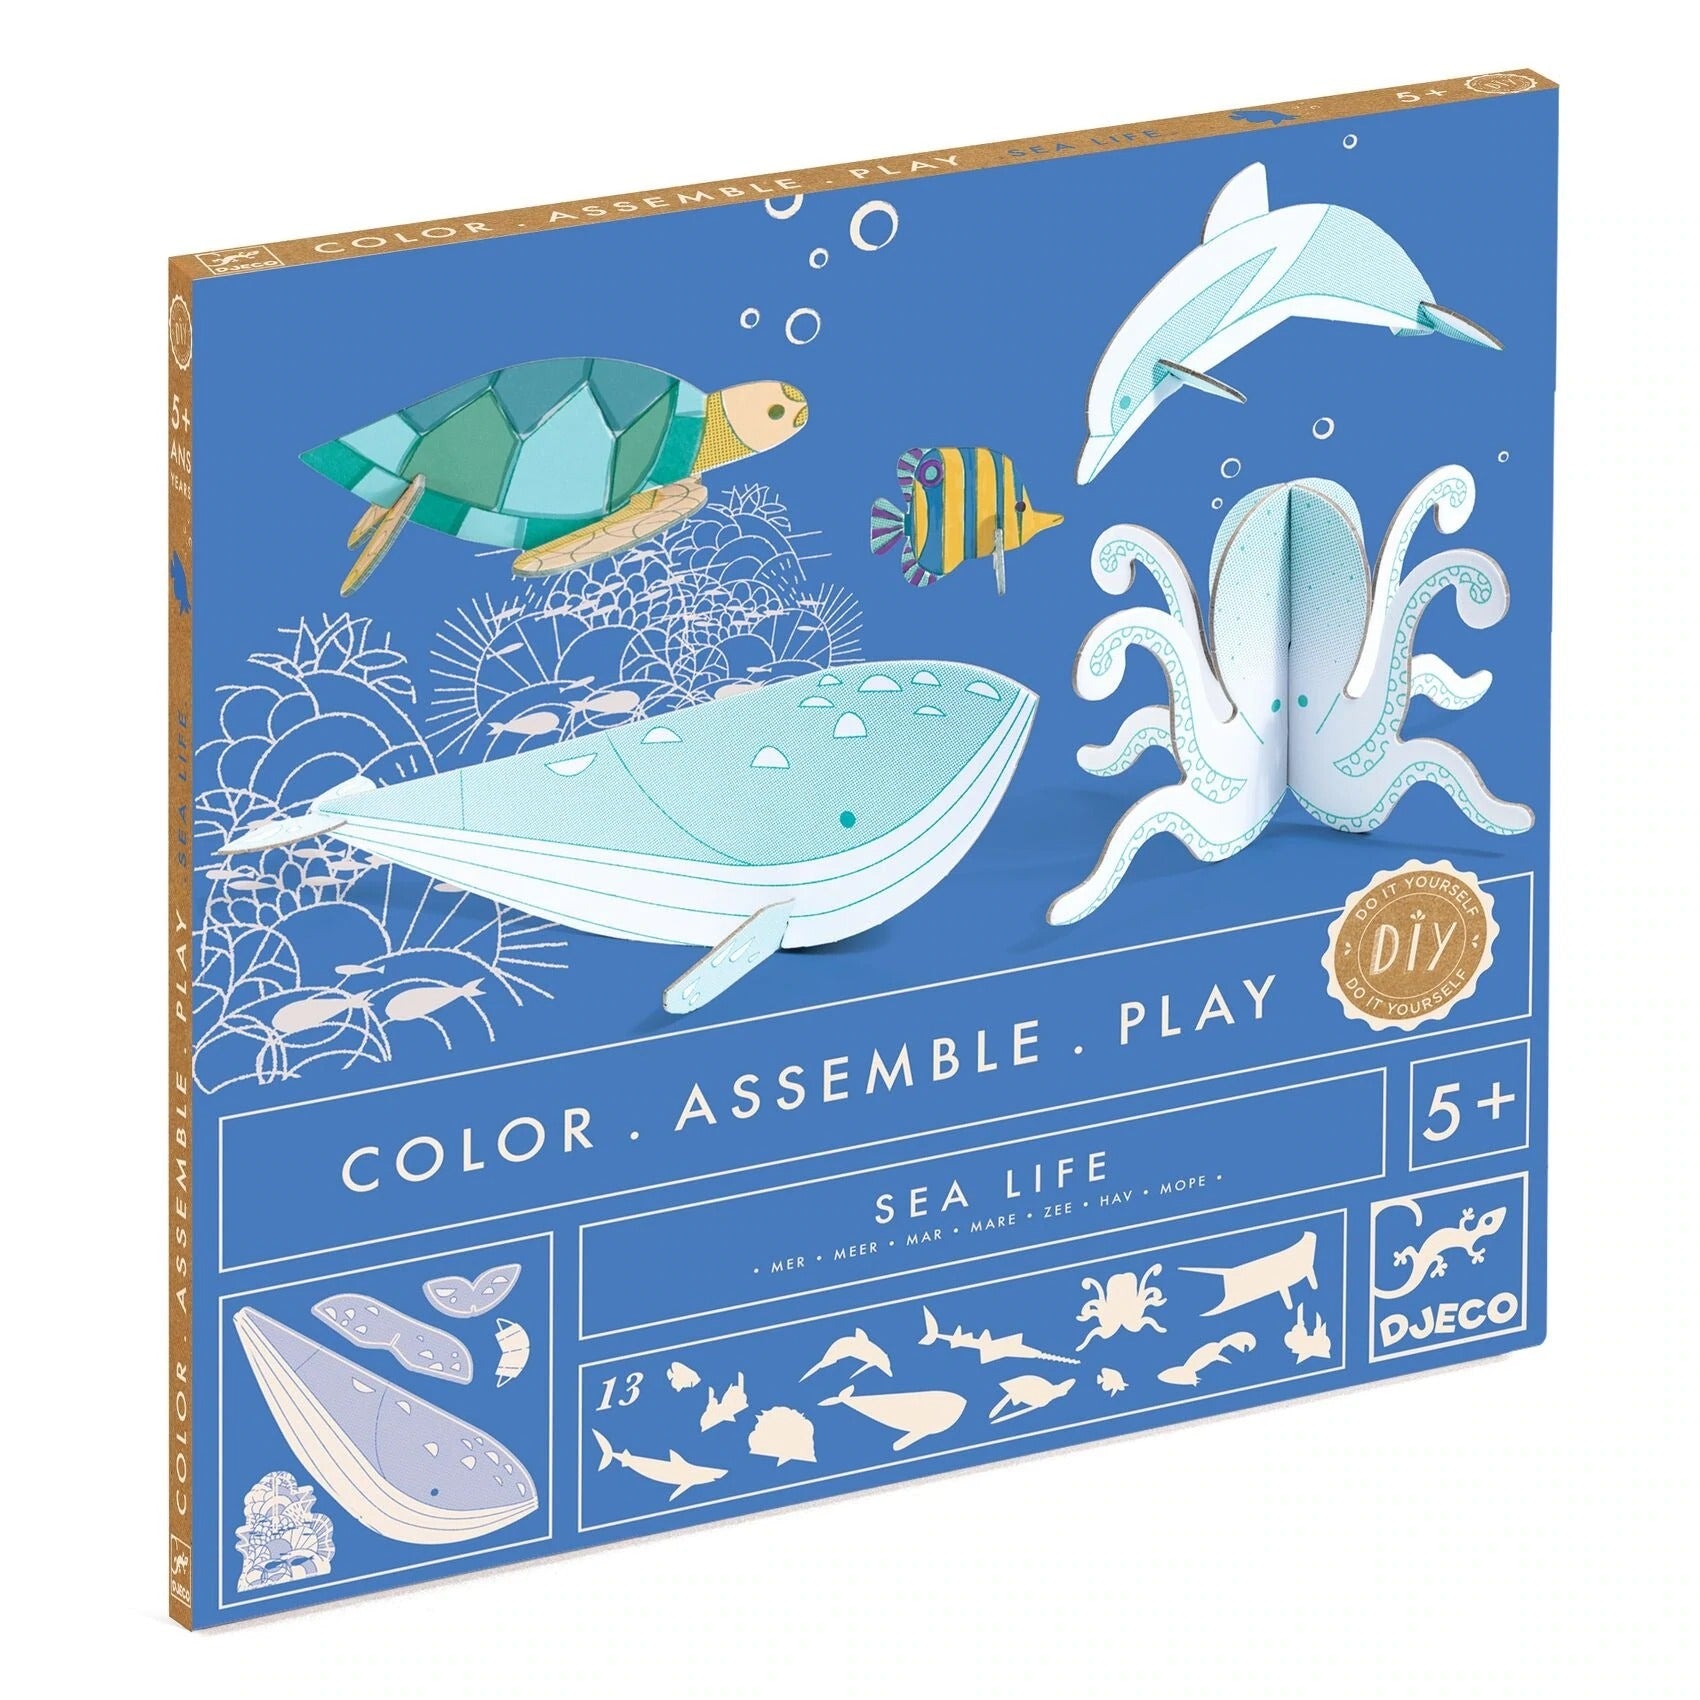 Color. Assemble. Play. Sea Life